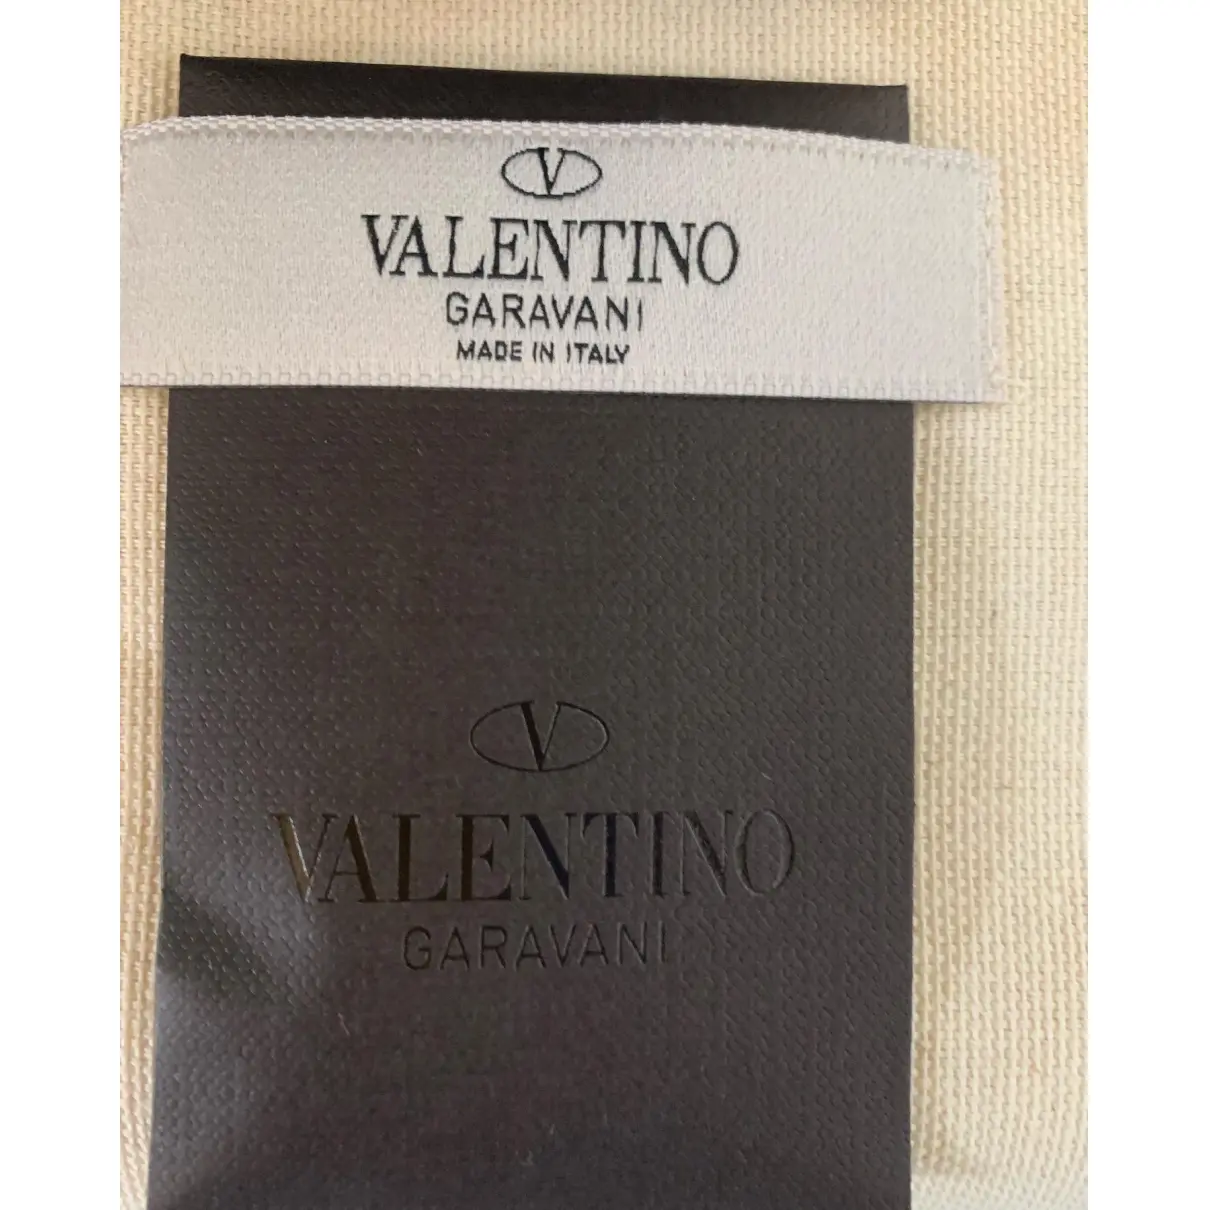 Leather lace ups Valentino Garavani